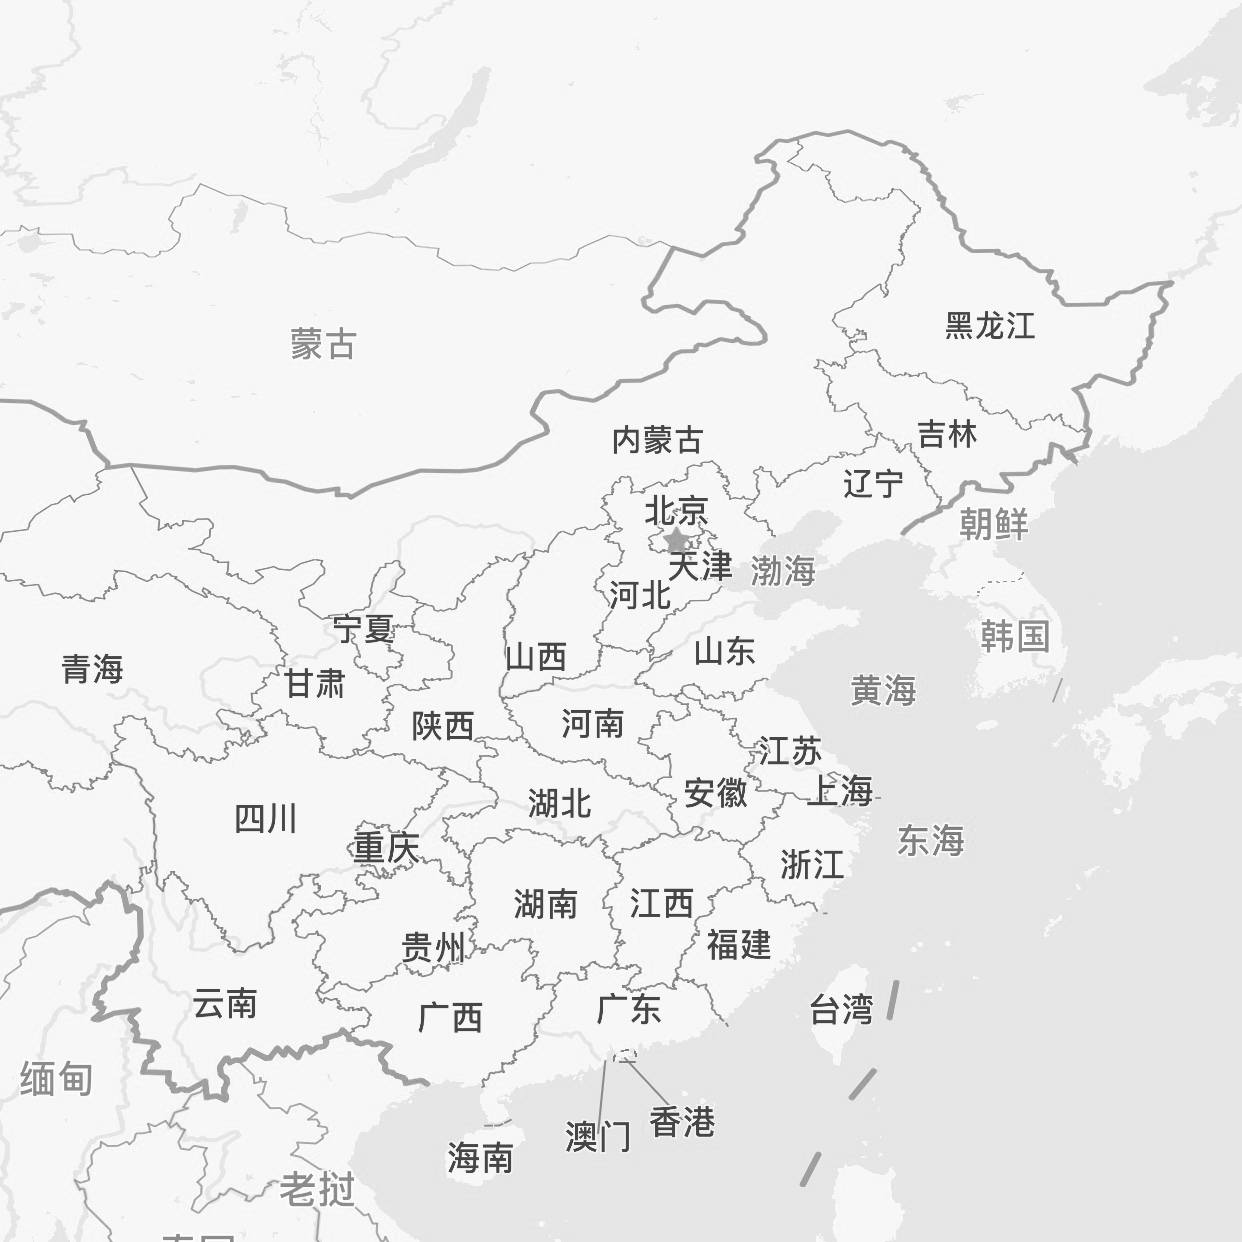 Beijing Surveillance Camera Map (Source: GaoDe Map)